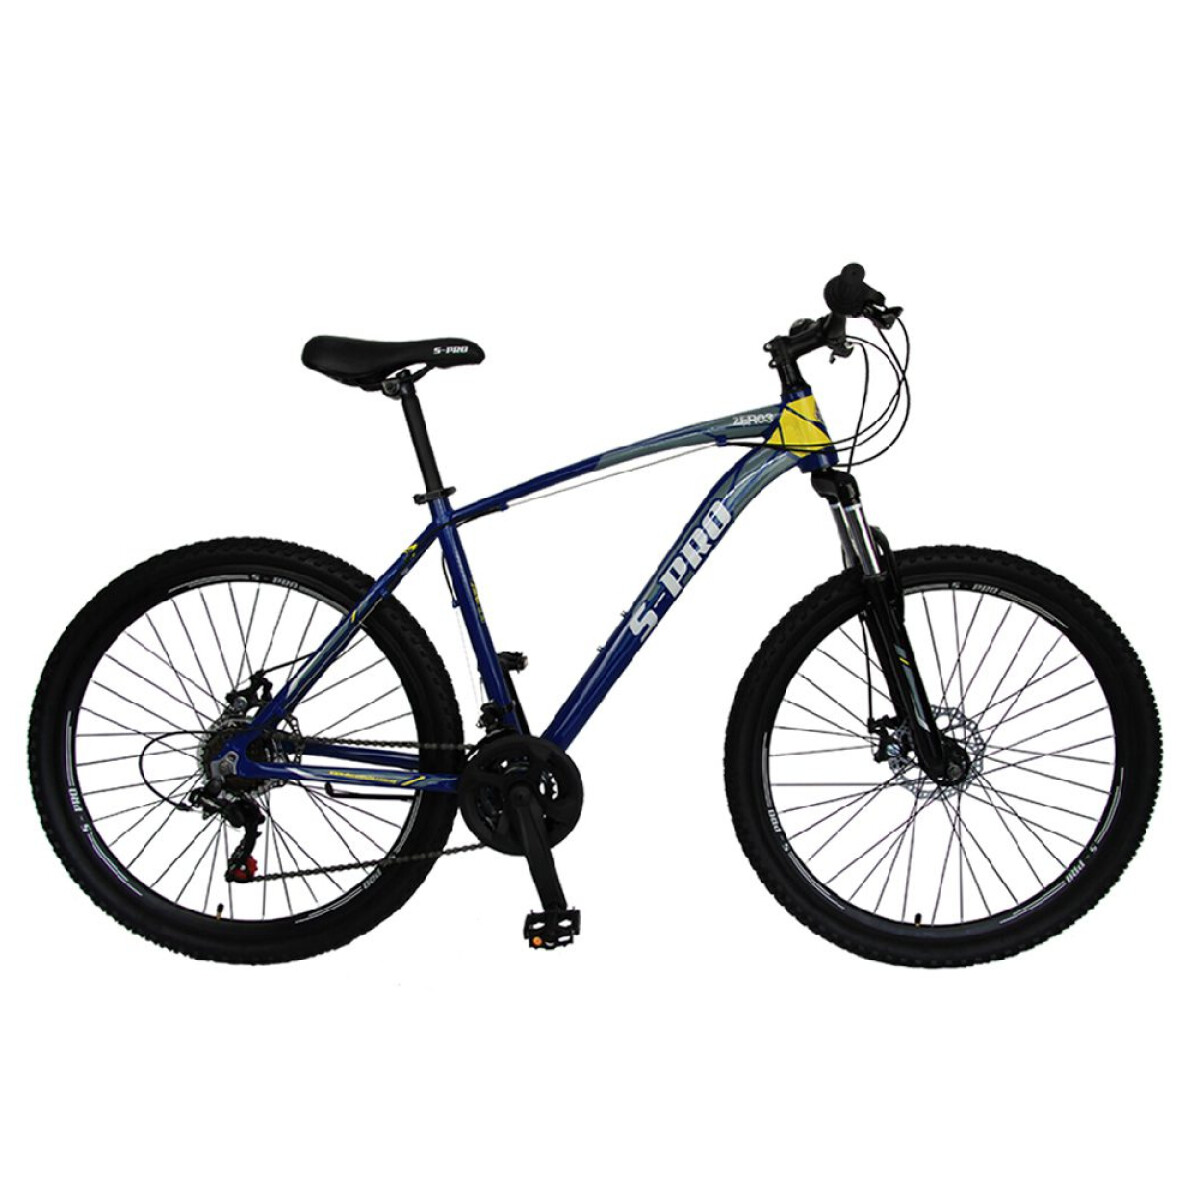 Bicicleta S-PRO ZERO3 Man - Azul y Gris 